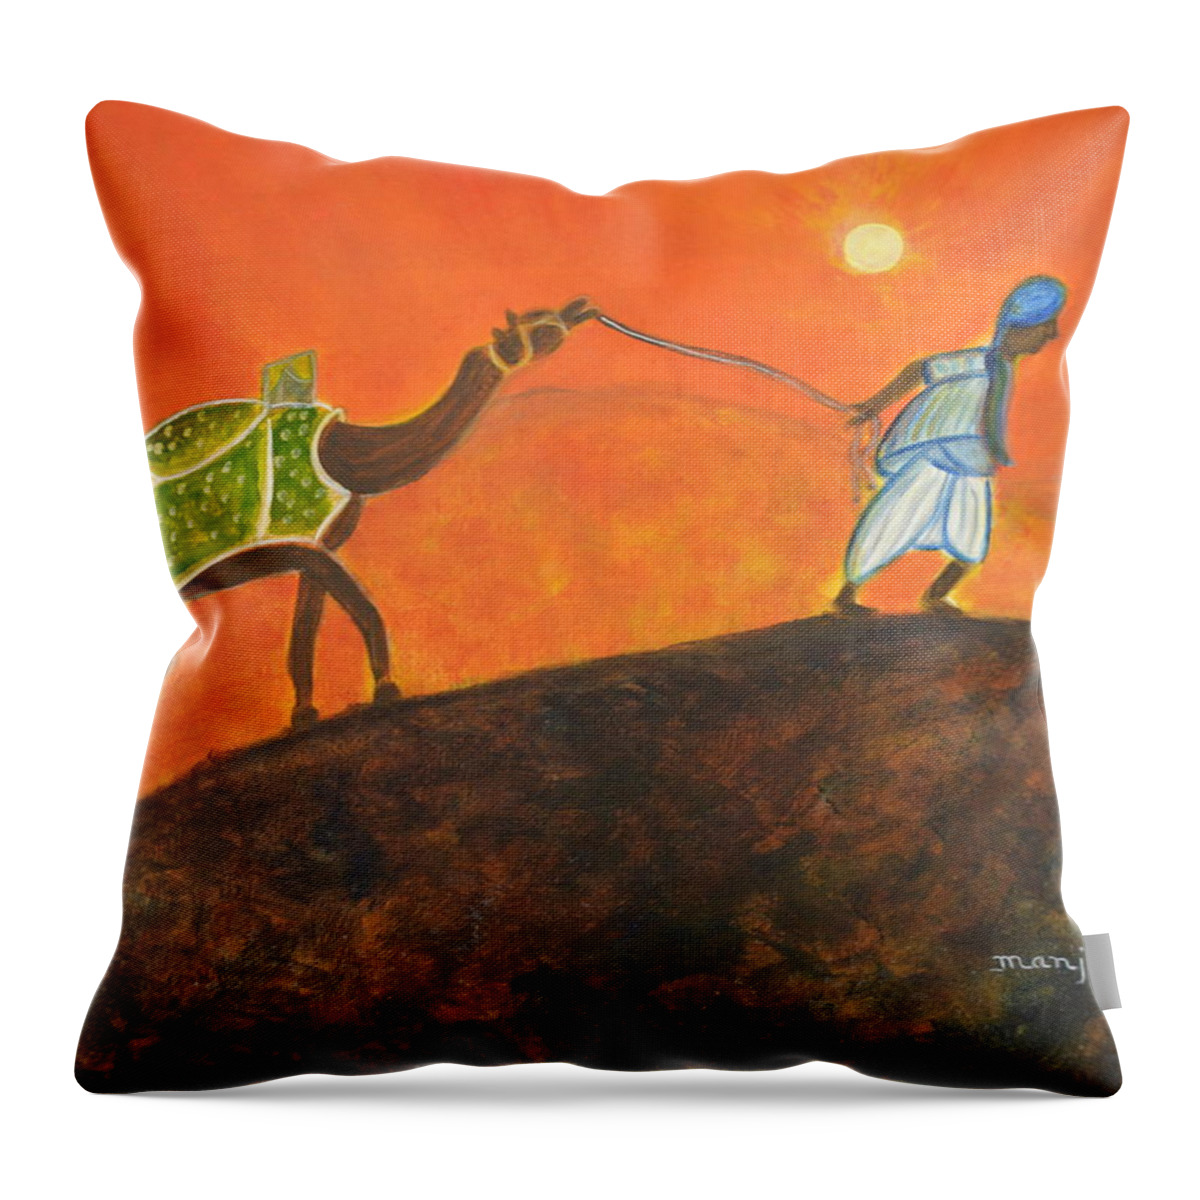 Desert Throw Pillow featuring the painting Desert Walk by Manjiri Kanvinde